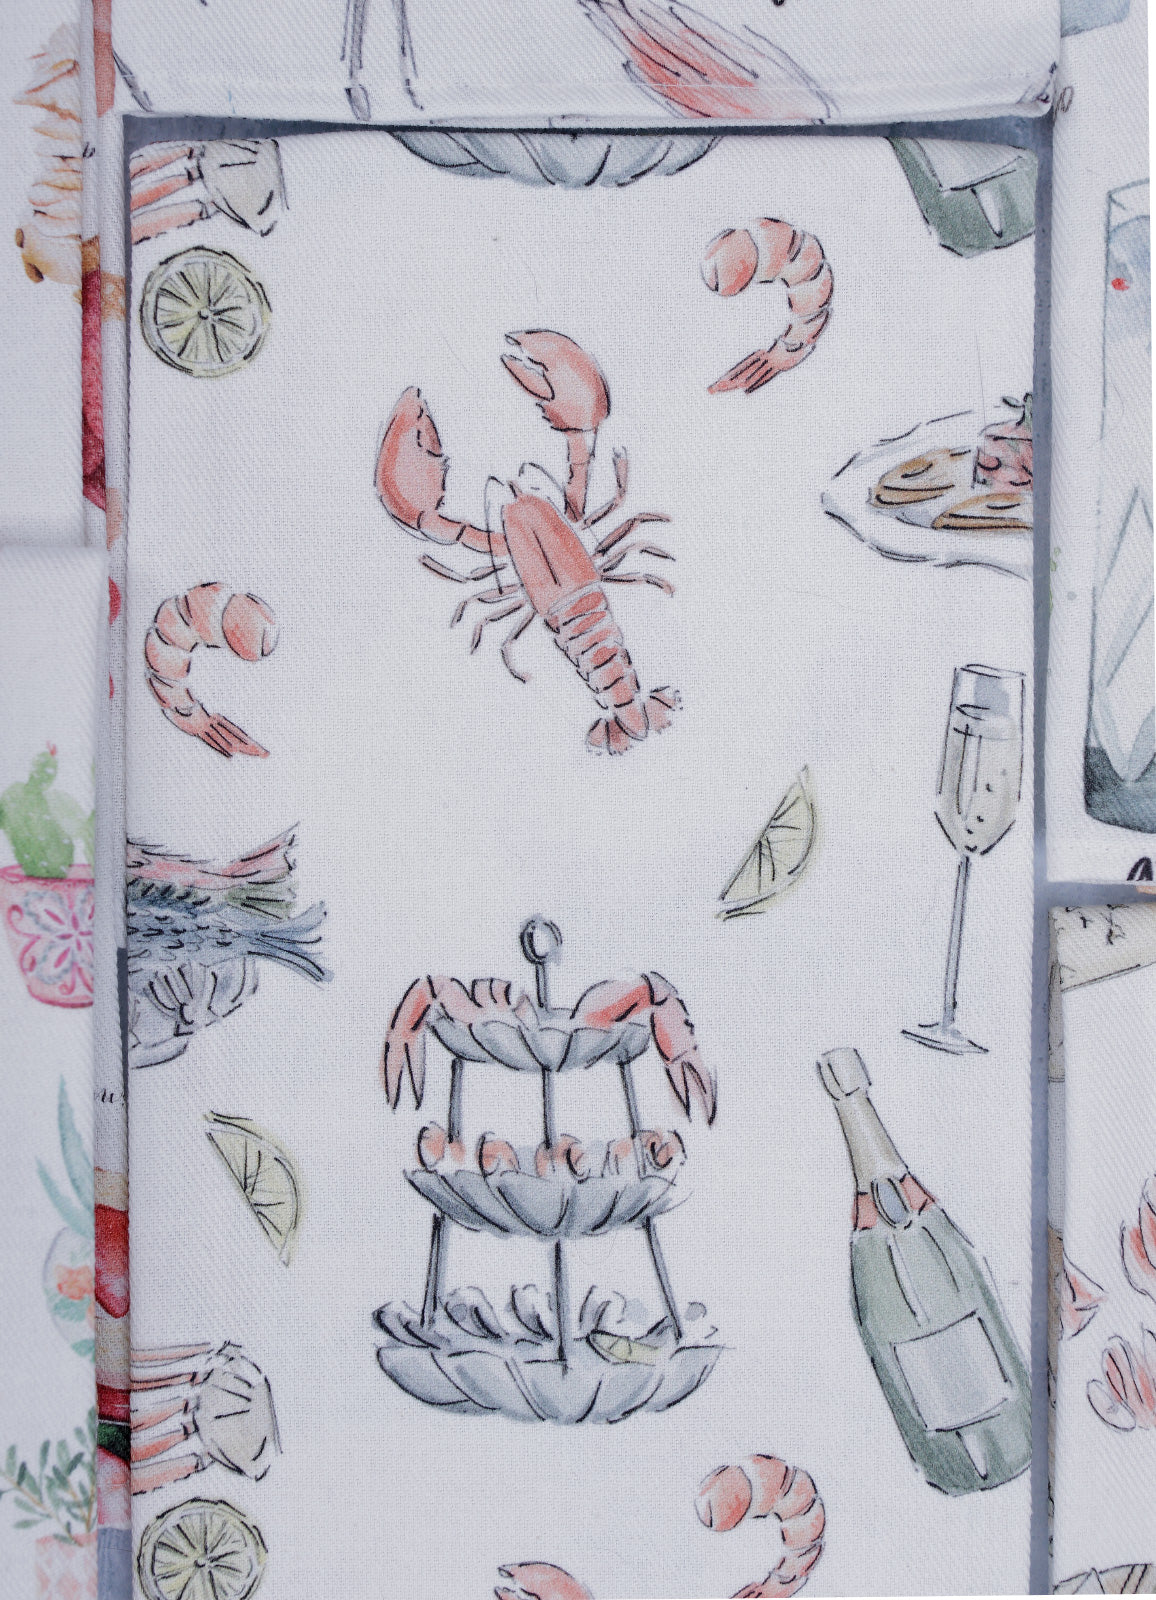 "Fruits de mer et Champagne - Seafood and Champagne" - Linge a vaisselle / Tea Towel